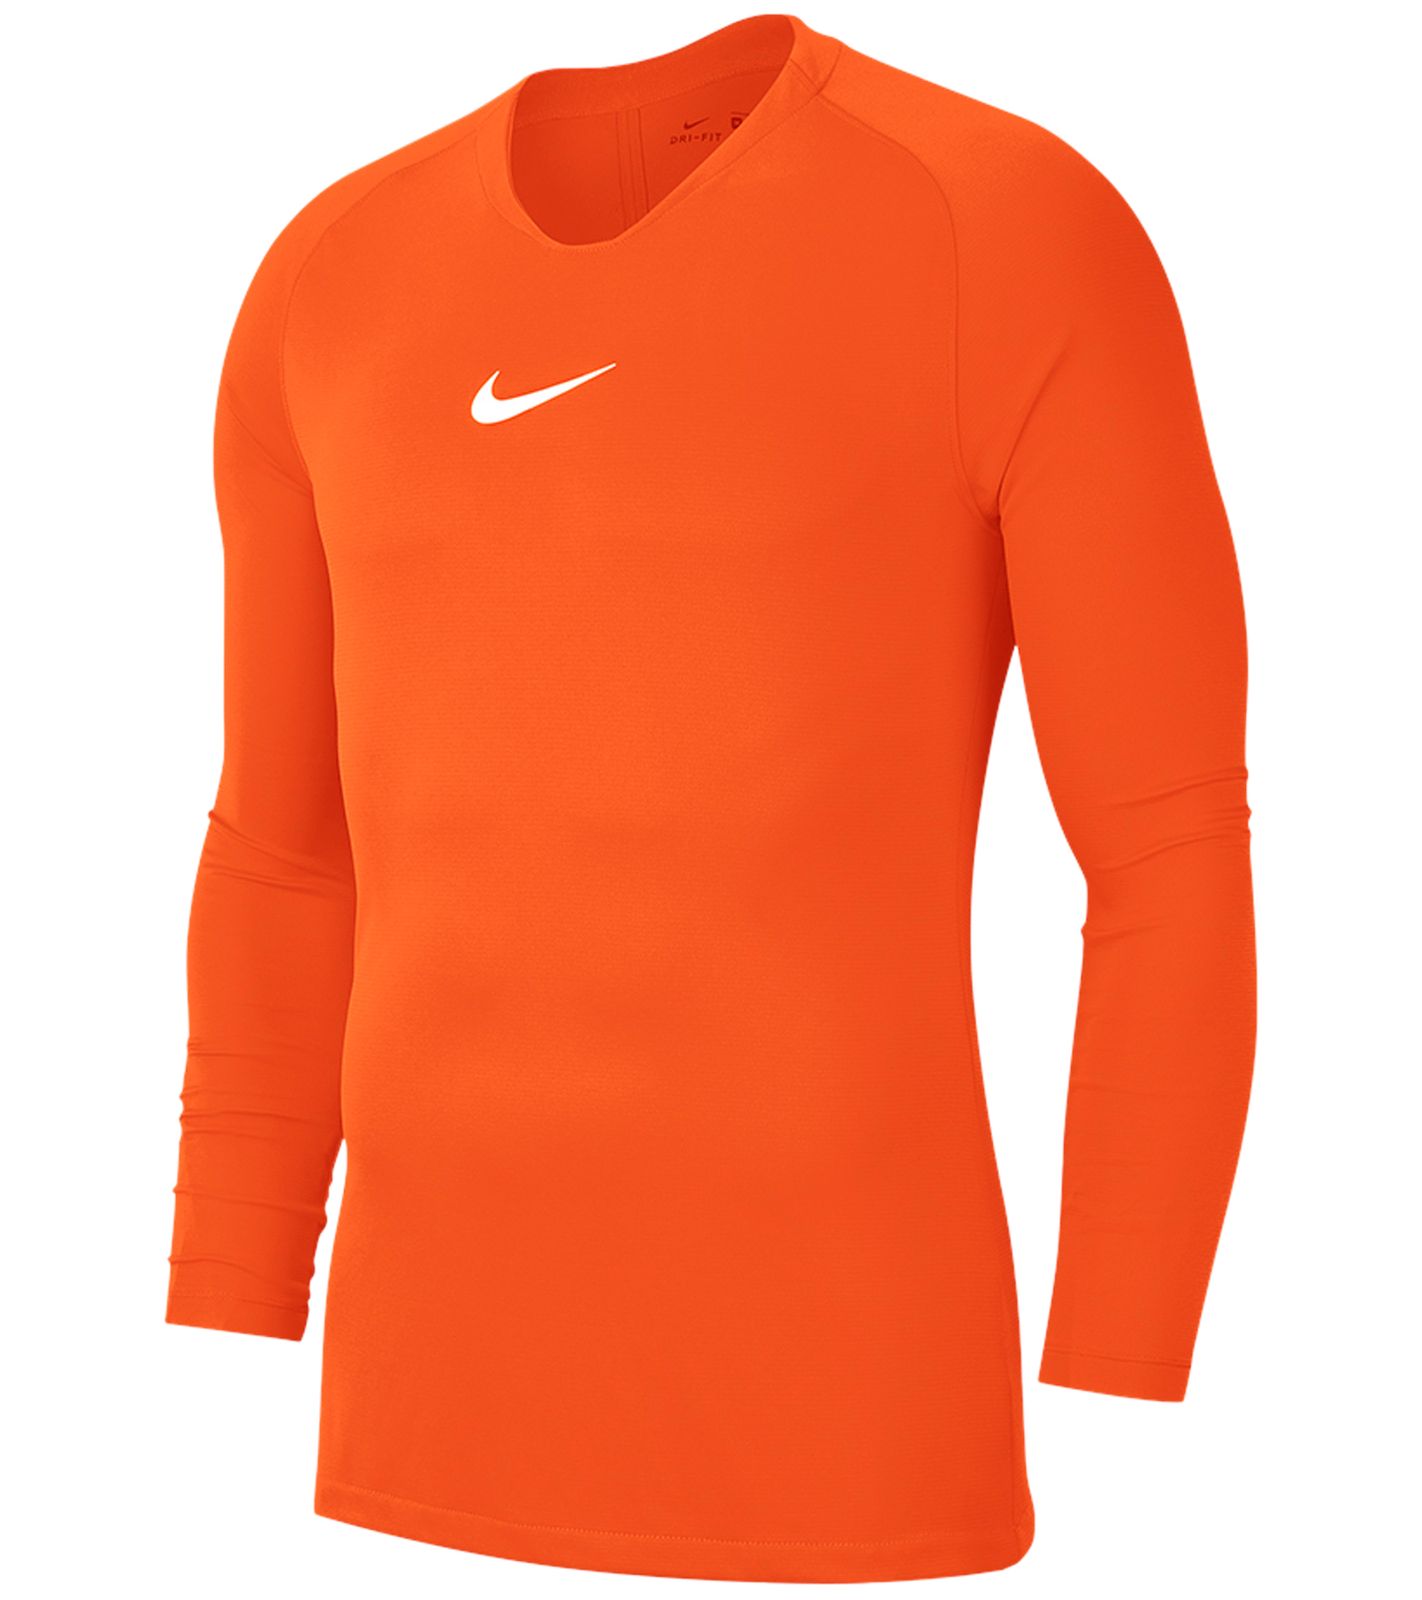 NIKE Performance Dry Park sportliches Langarm-Shirt mit Dry-Fit Technologie AV2609-819 Orange von NIKE